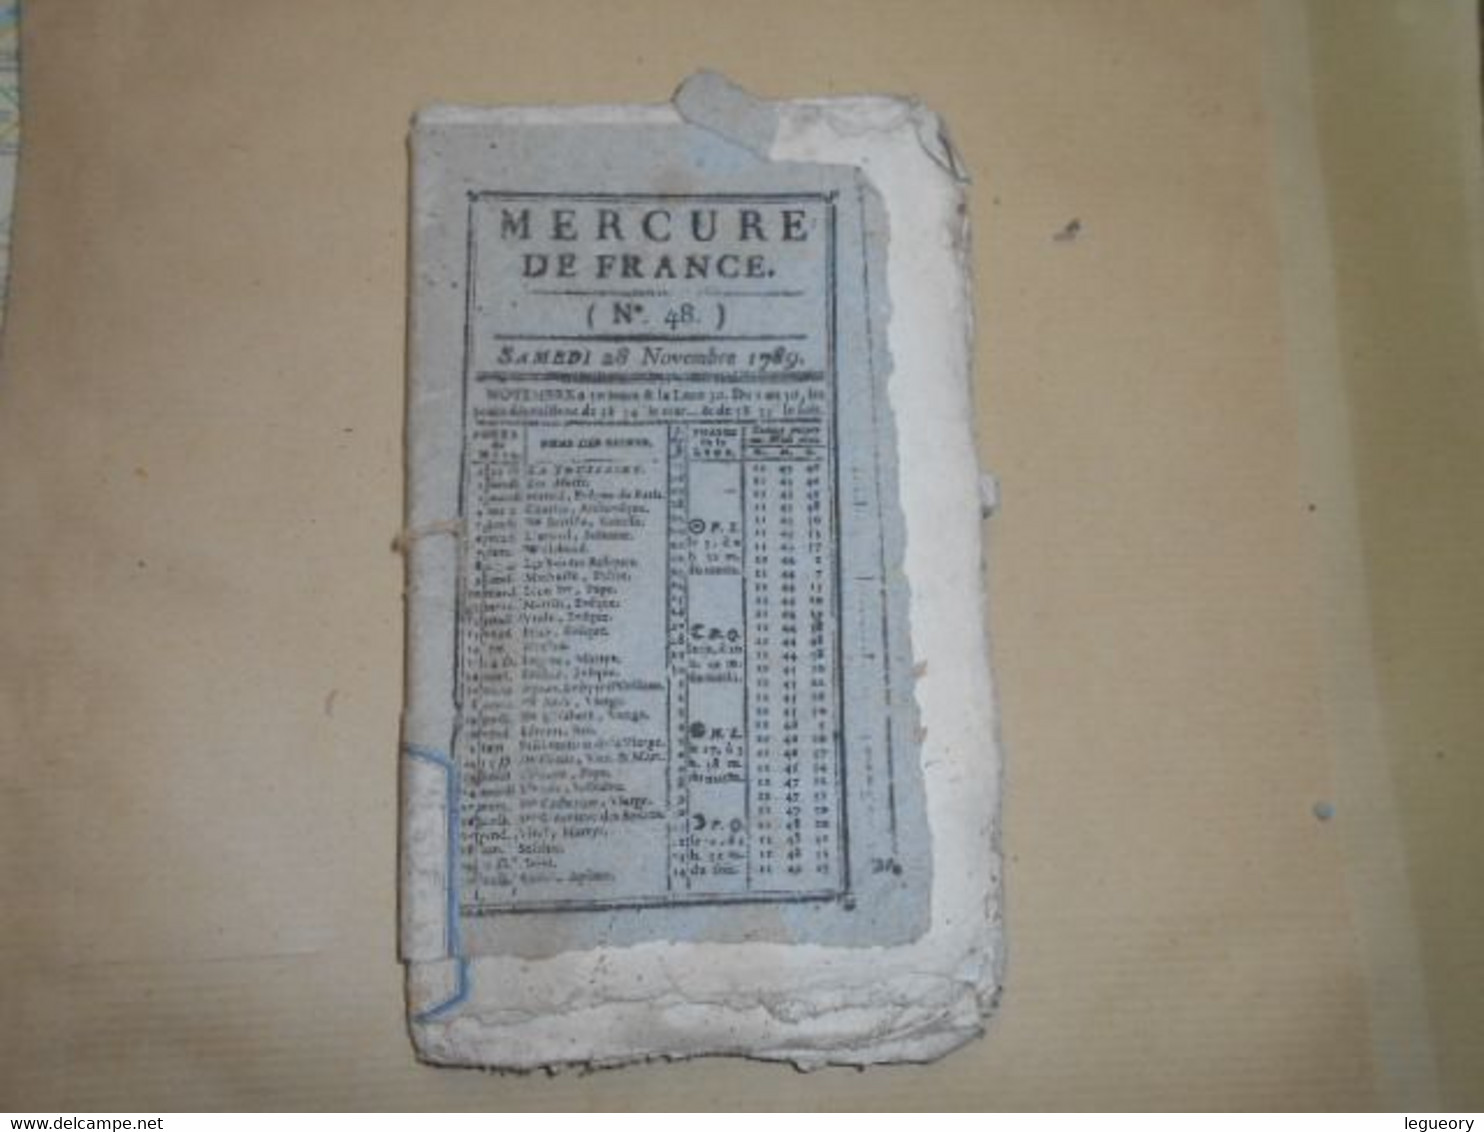 Mercure De France  N° 48   Samedi   28 Novembre  1789   Journal De La Librairie - Zeitungen - Vor 1800